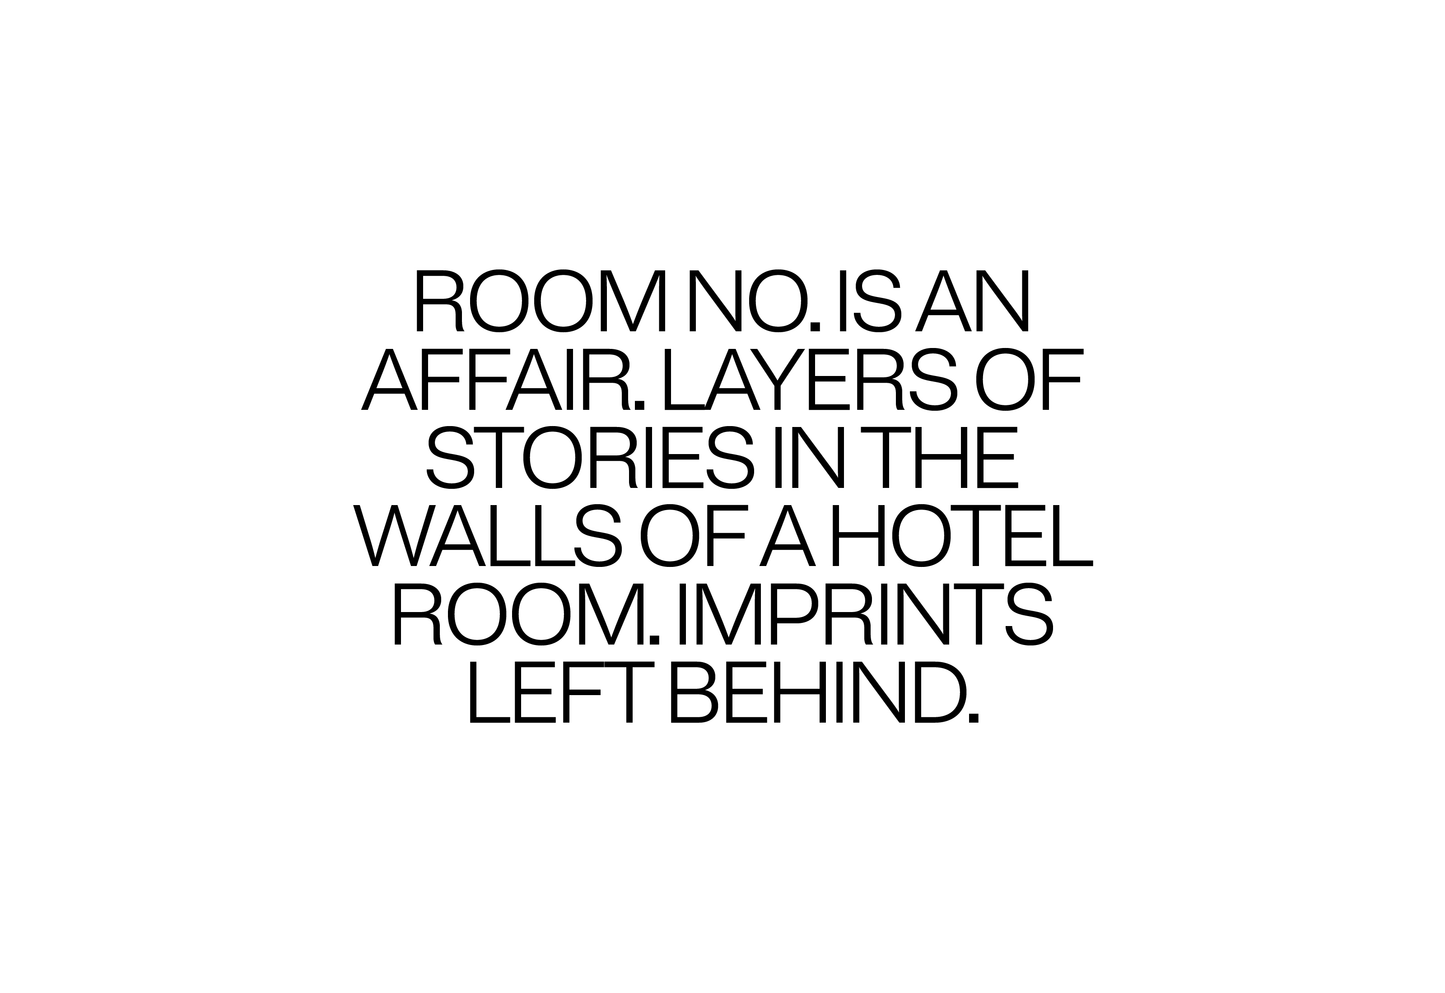 Room No. is an affair. 